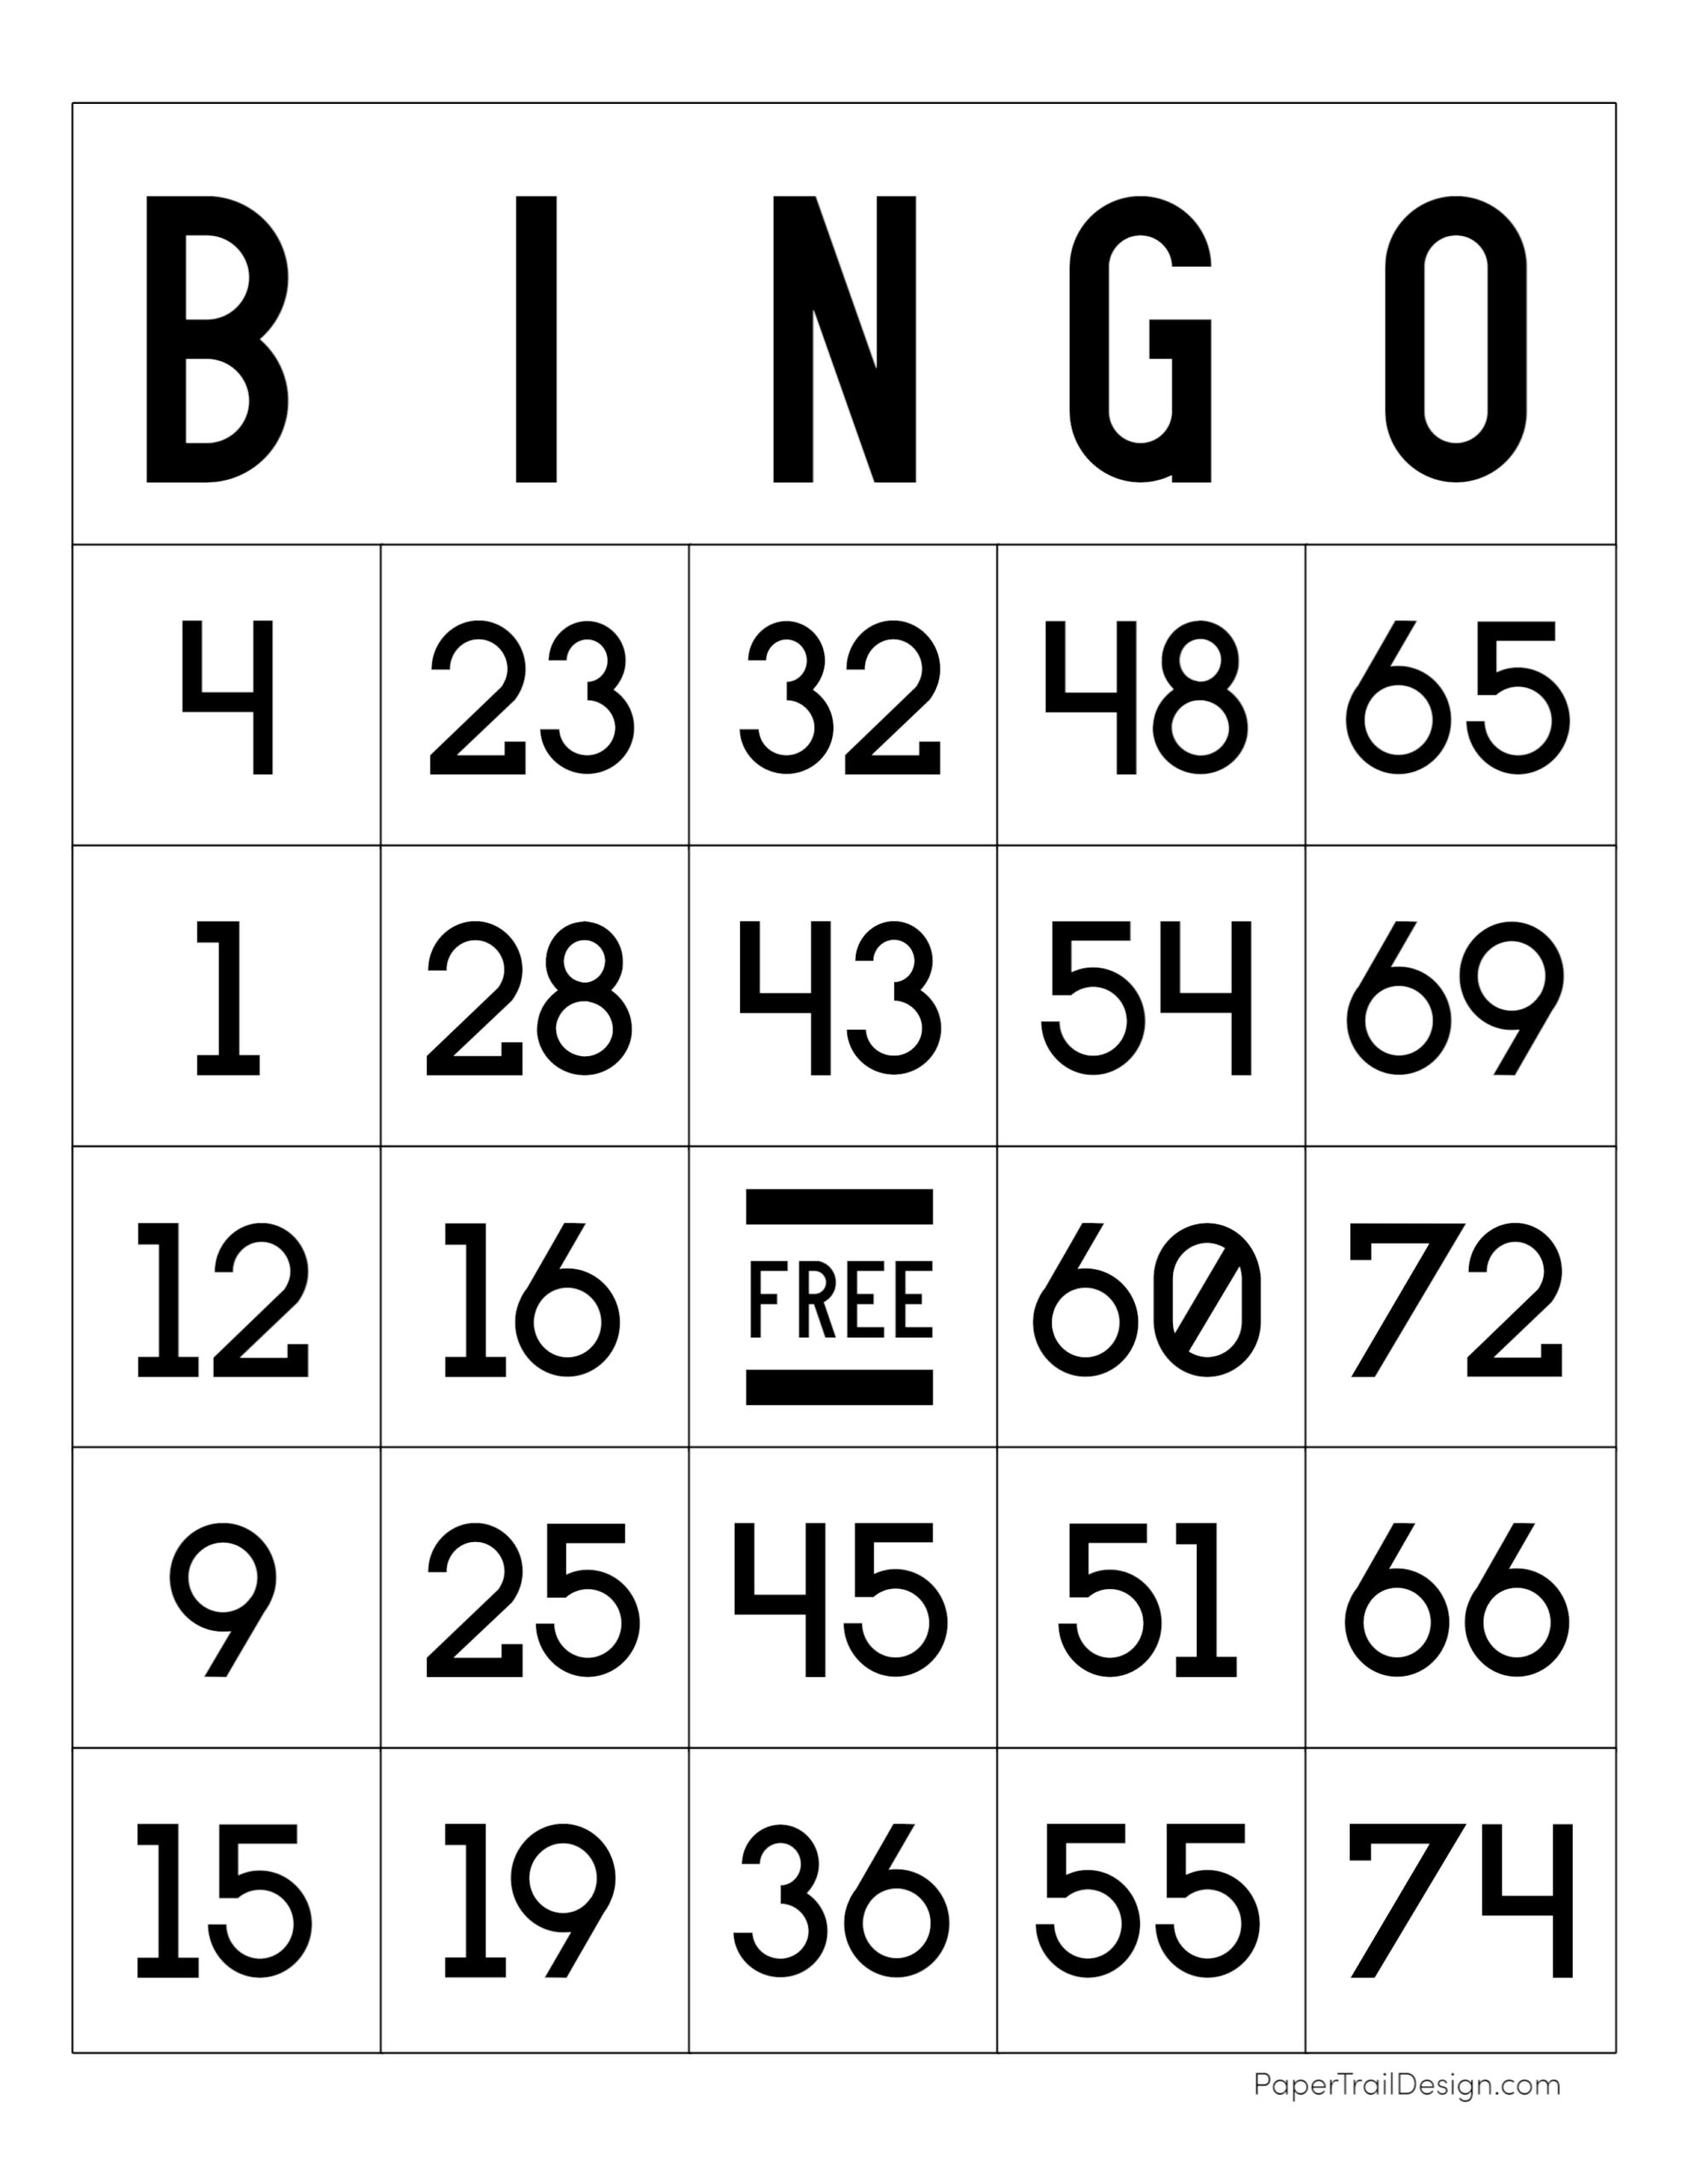 Free Printable Bingo Cards Paper Trail Design Swiss sensing 